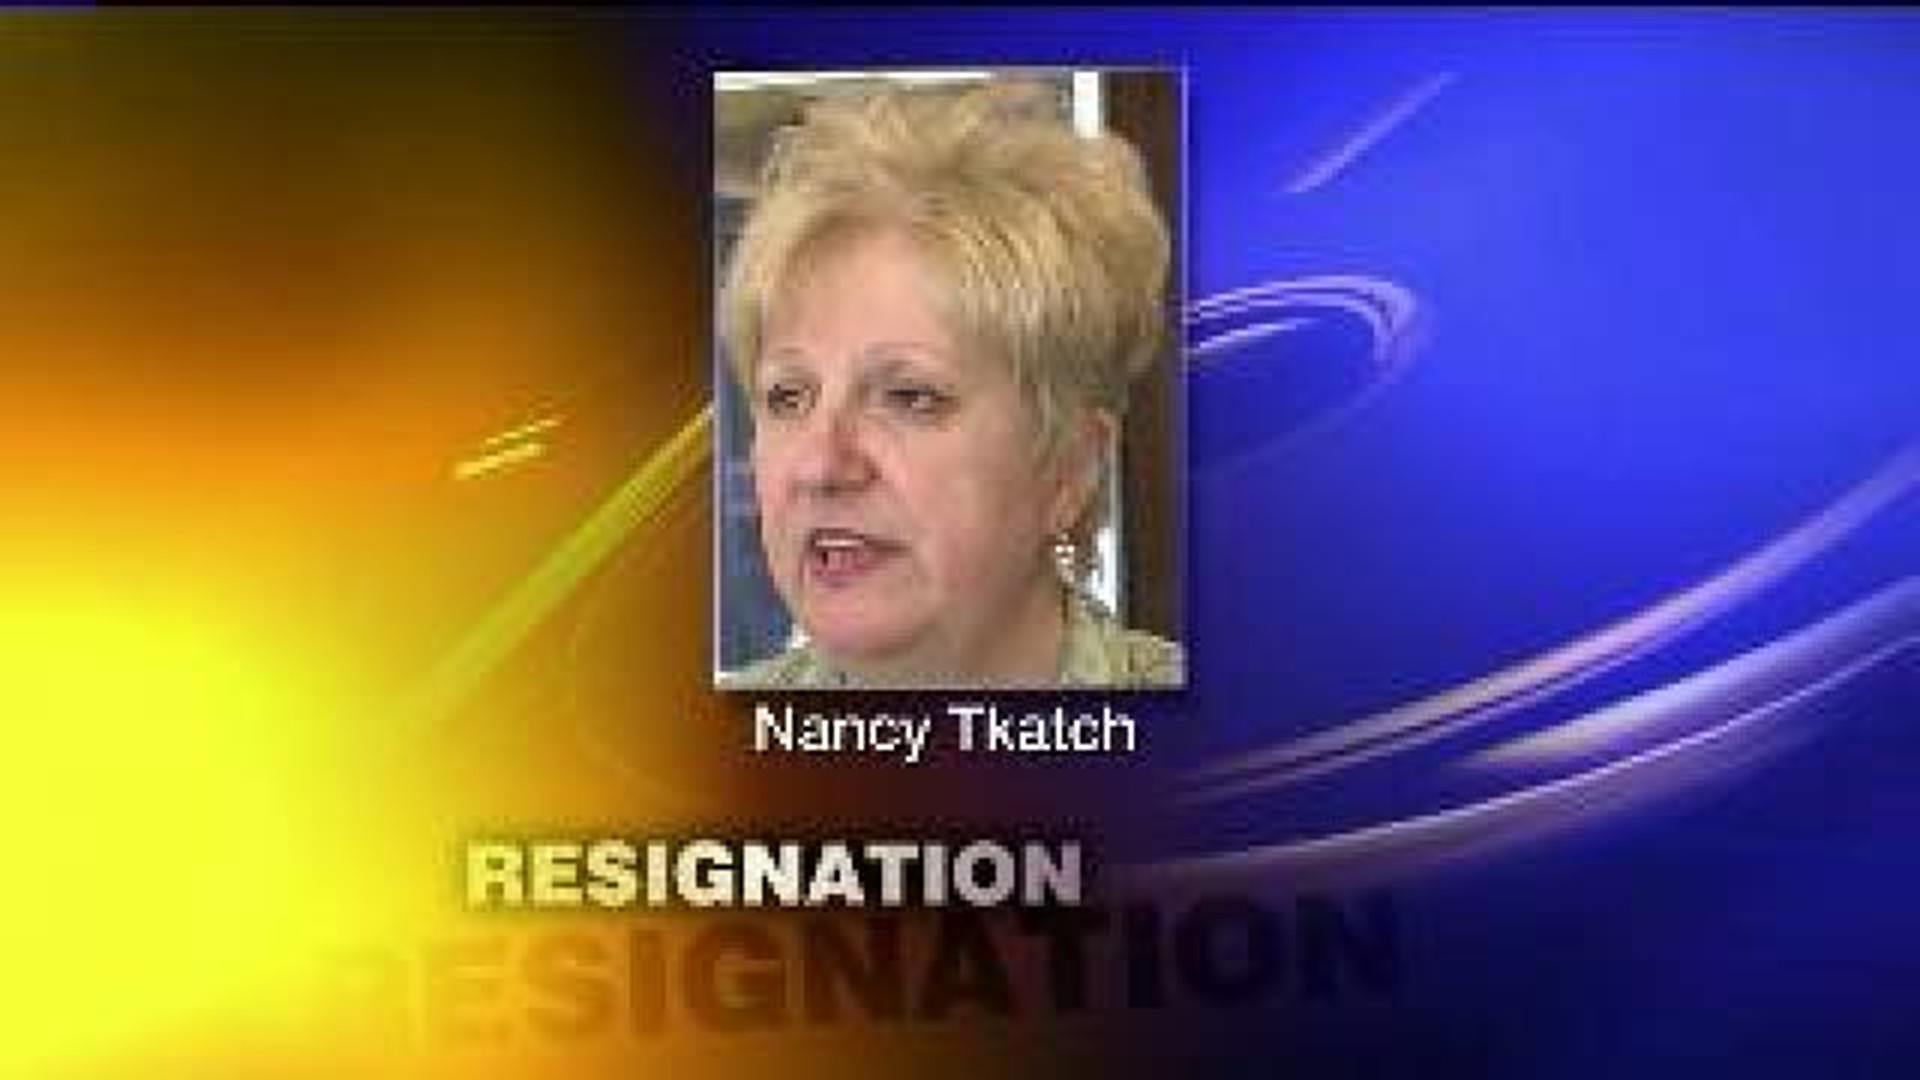 Administrative Director Resigns After Internal Investigation